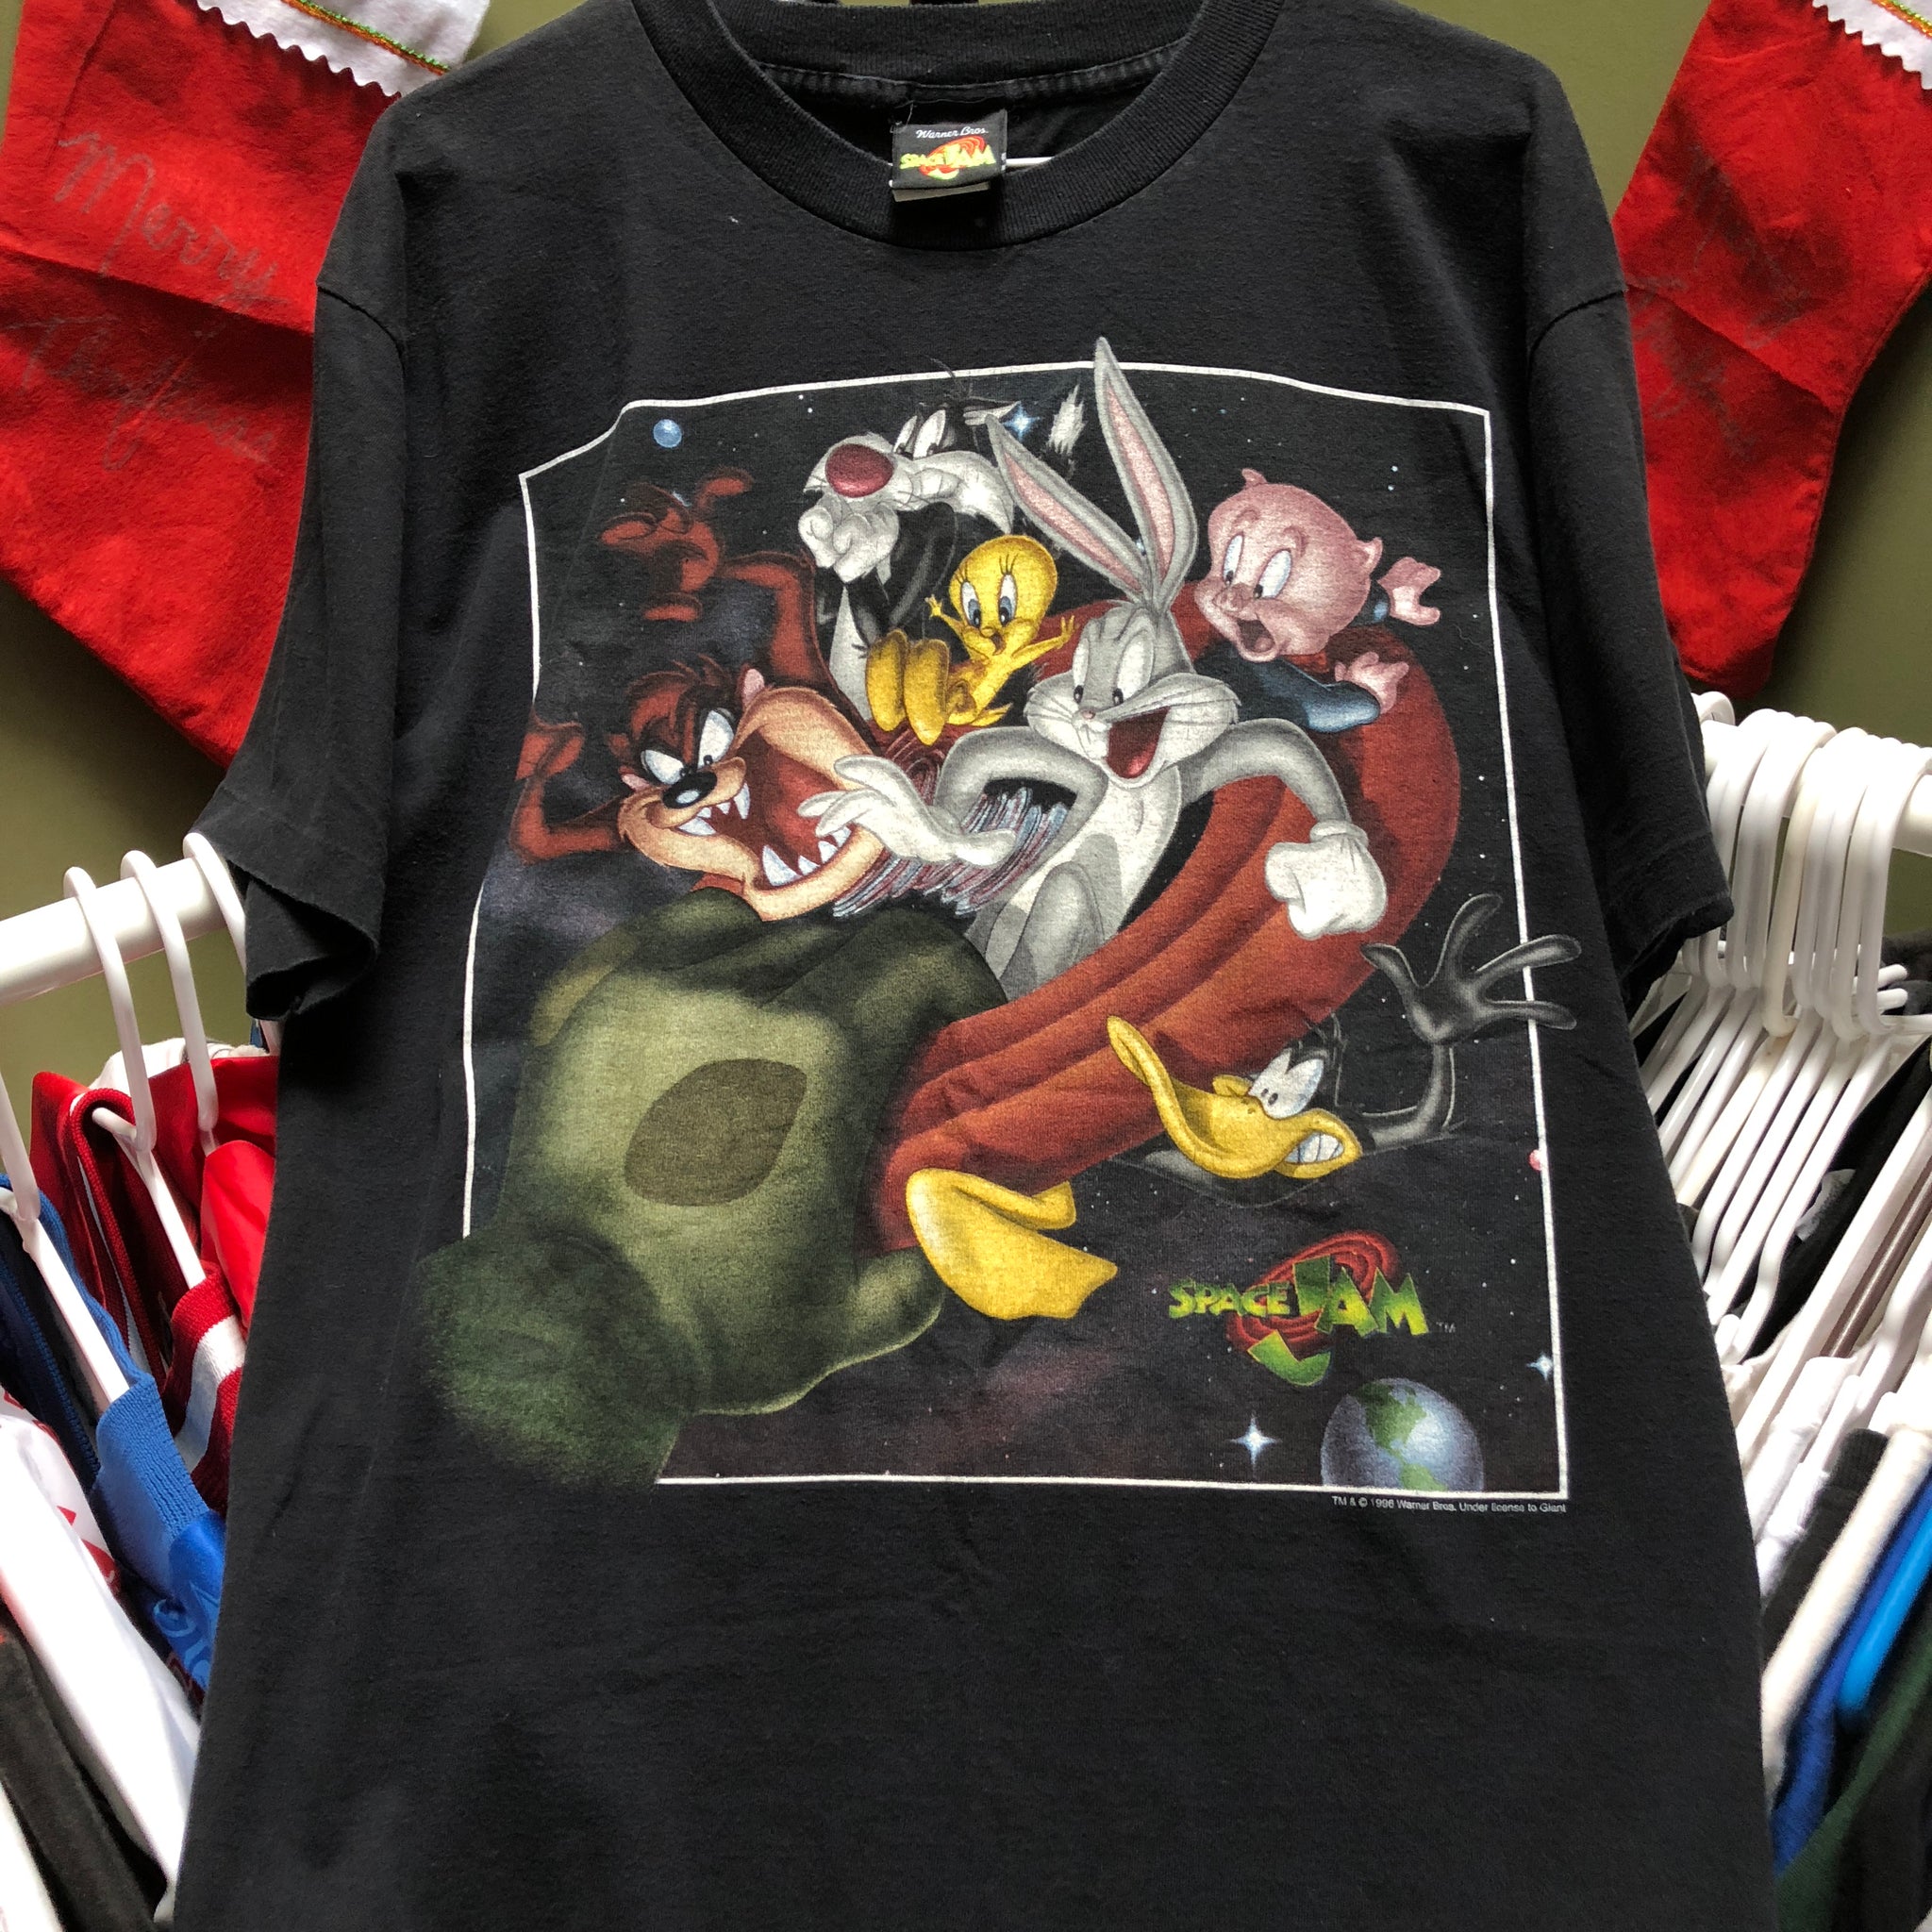 Vintage 1996 Space Jam Movie Poster T-Shirt